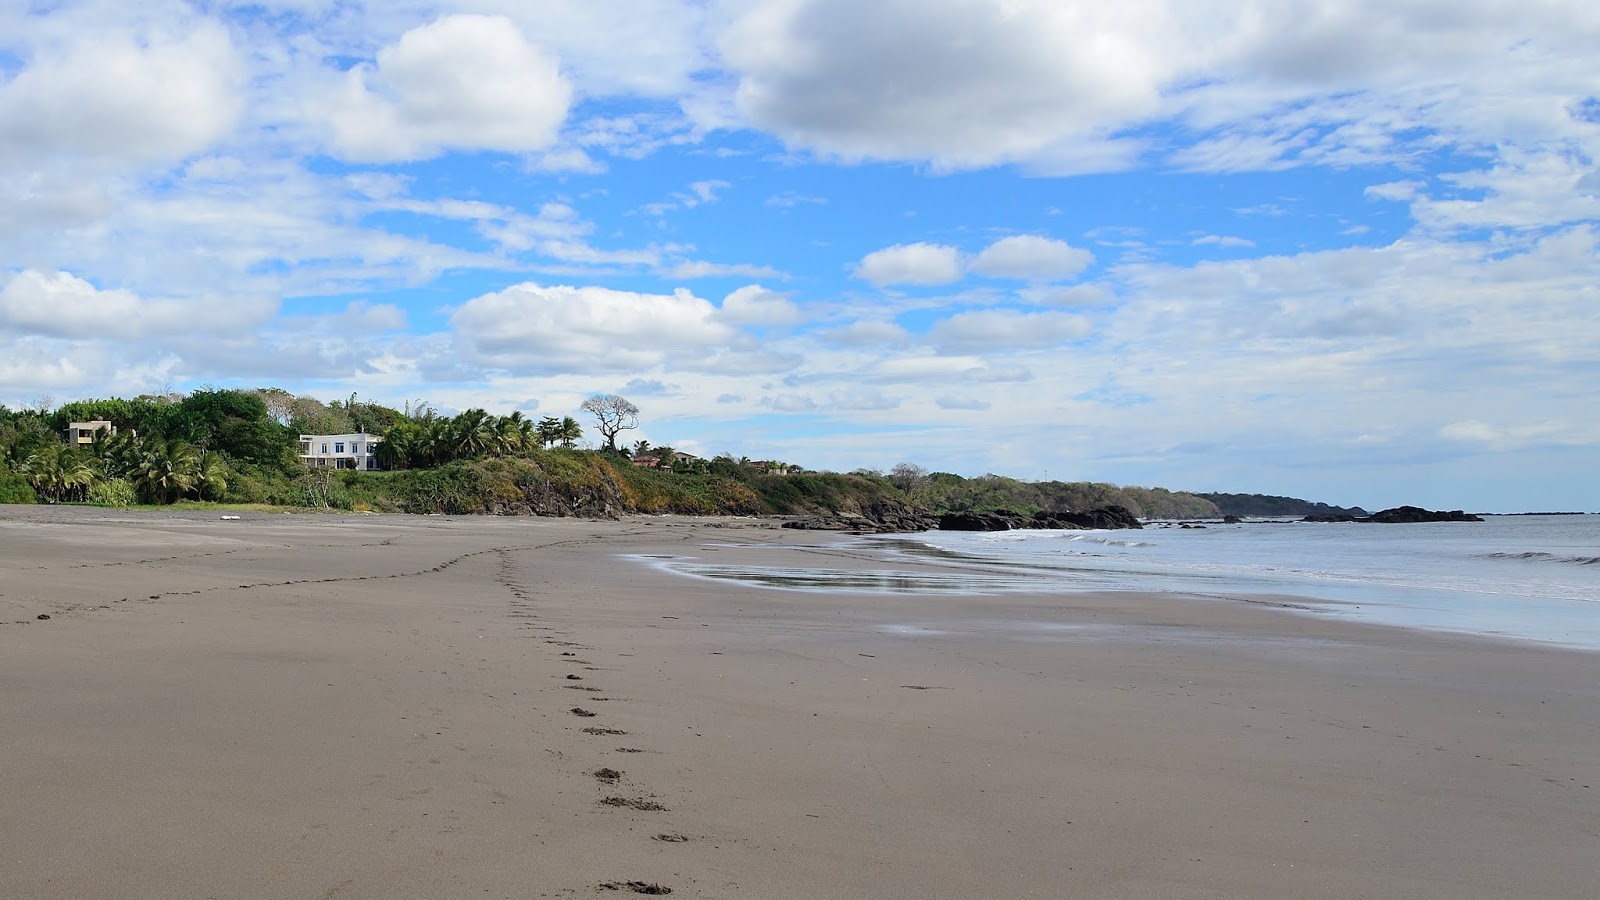 Foto di Playa Azul con una superficie del sabbia con pietre